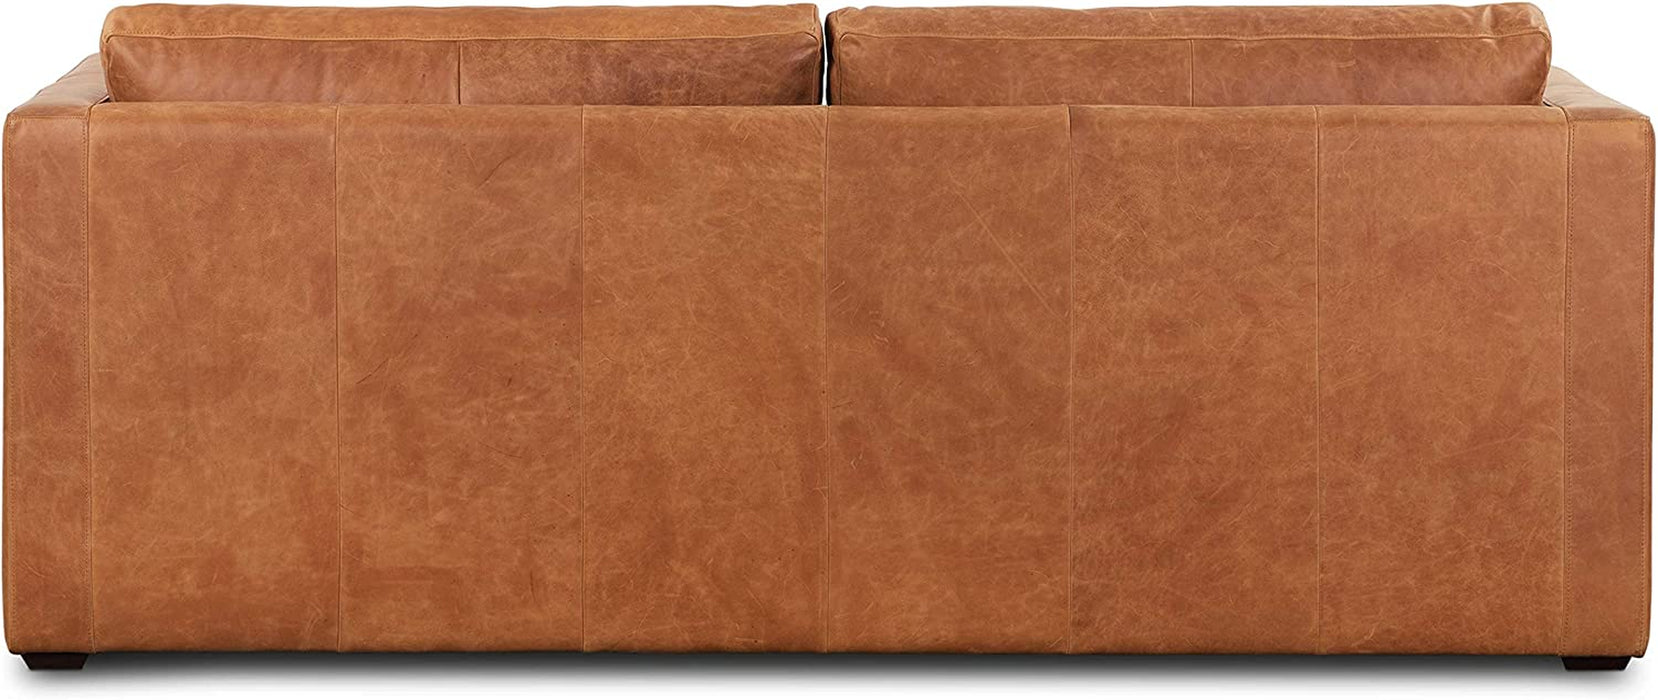 82″ Cognac Tan Leather Sleeper Sofa